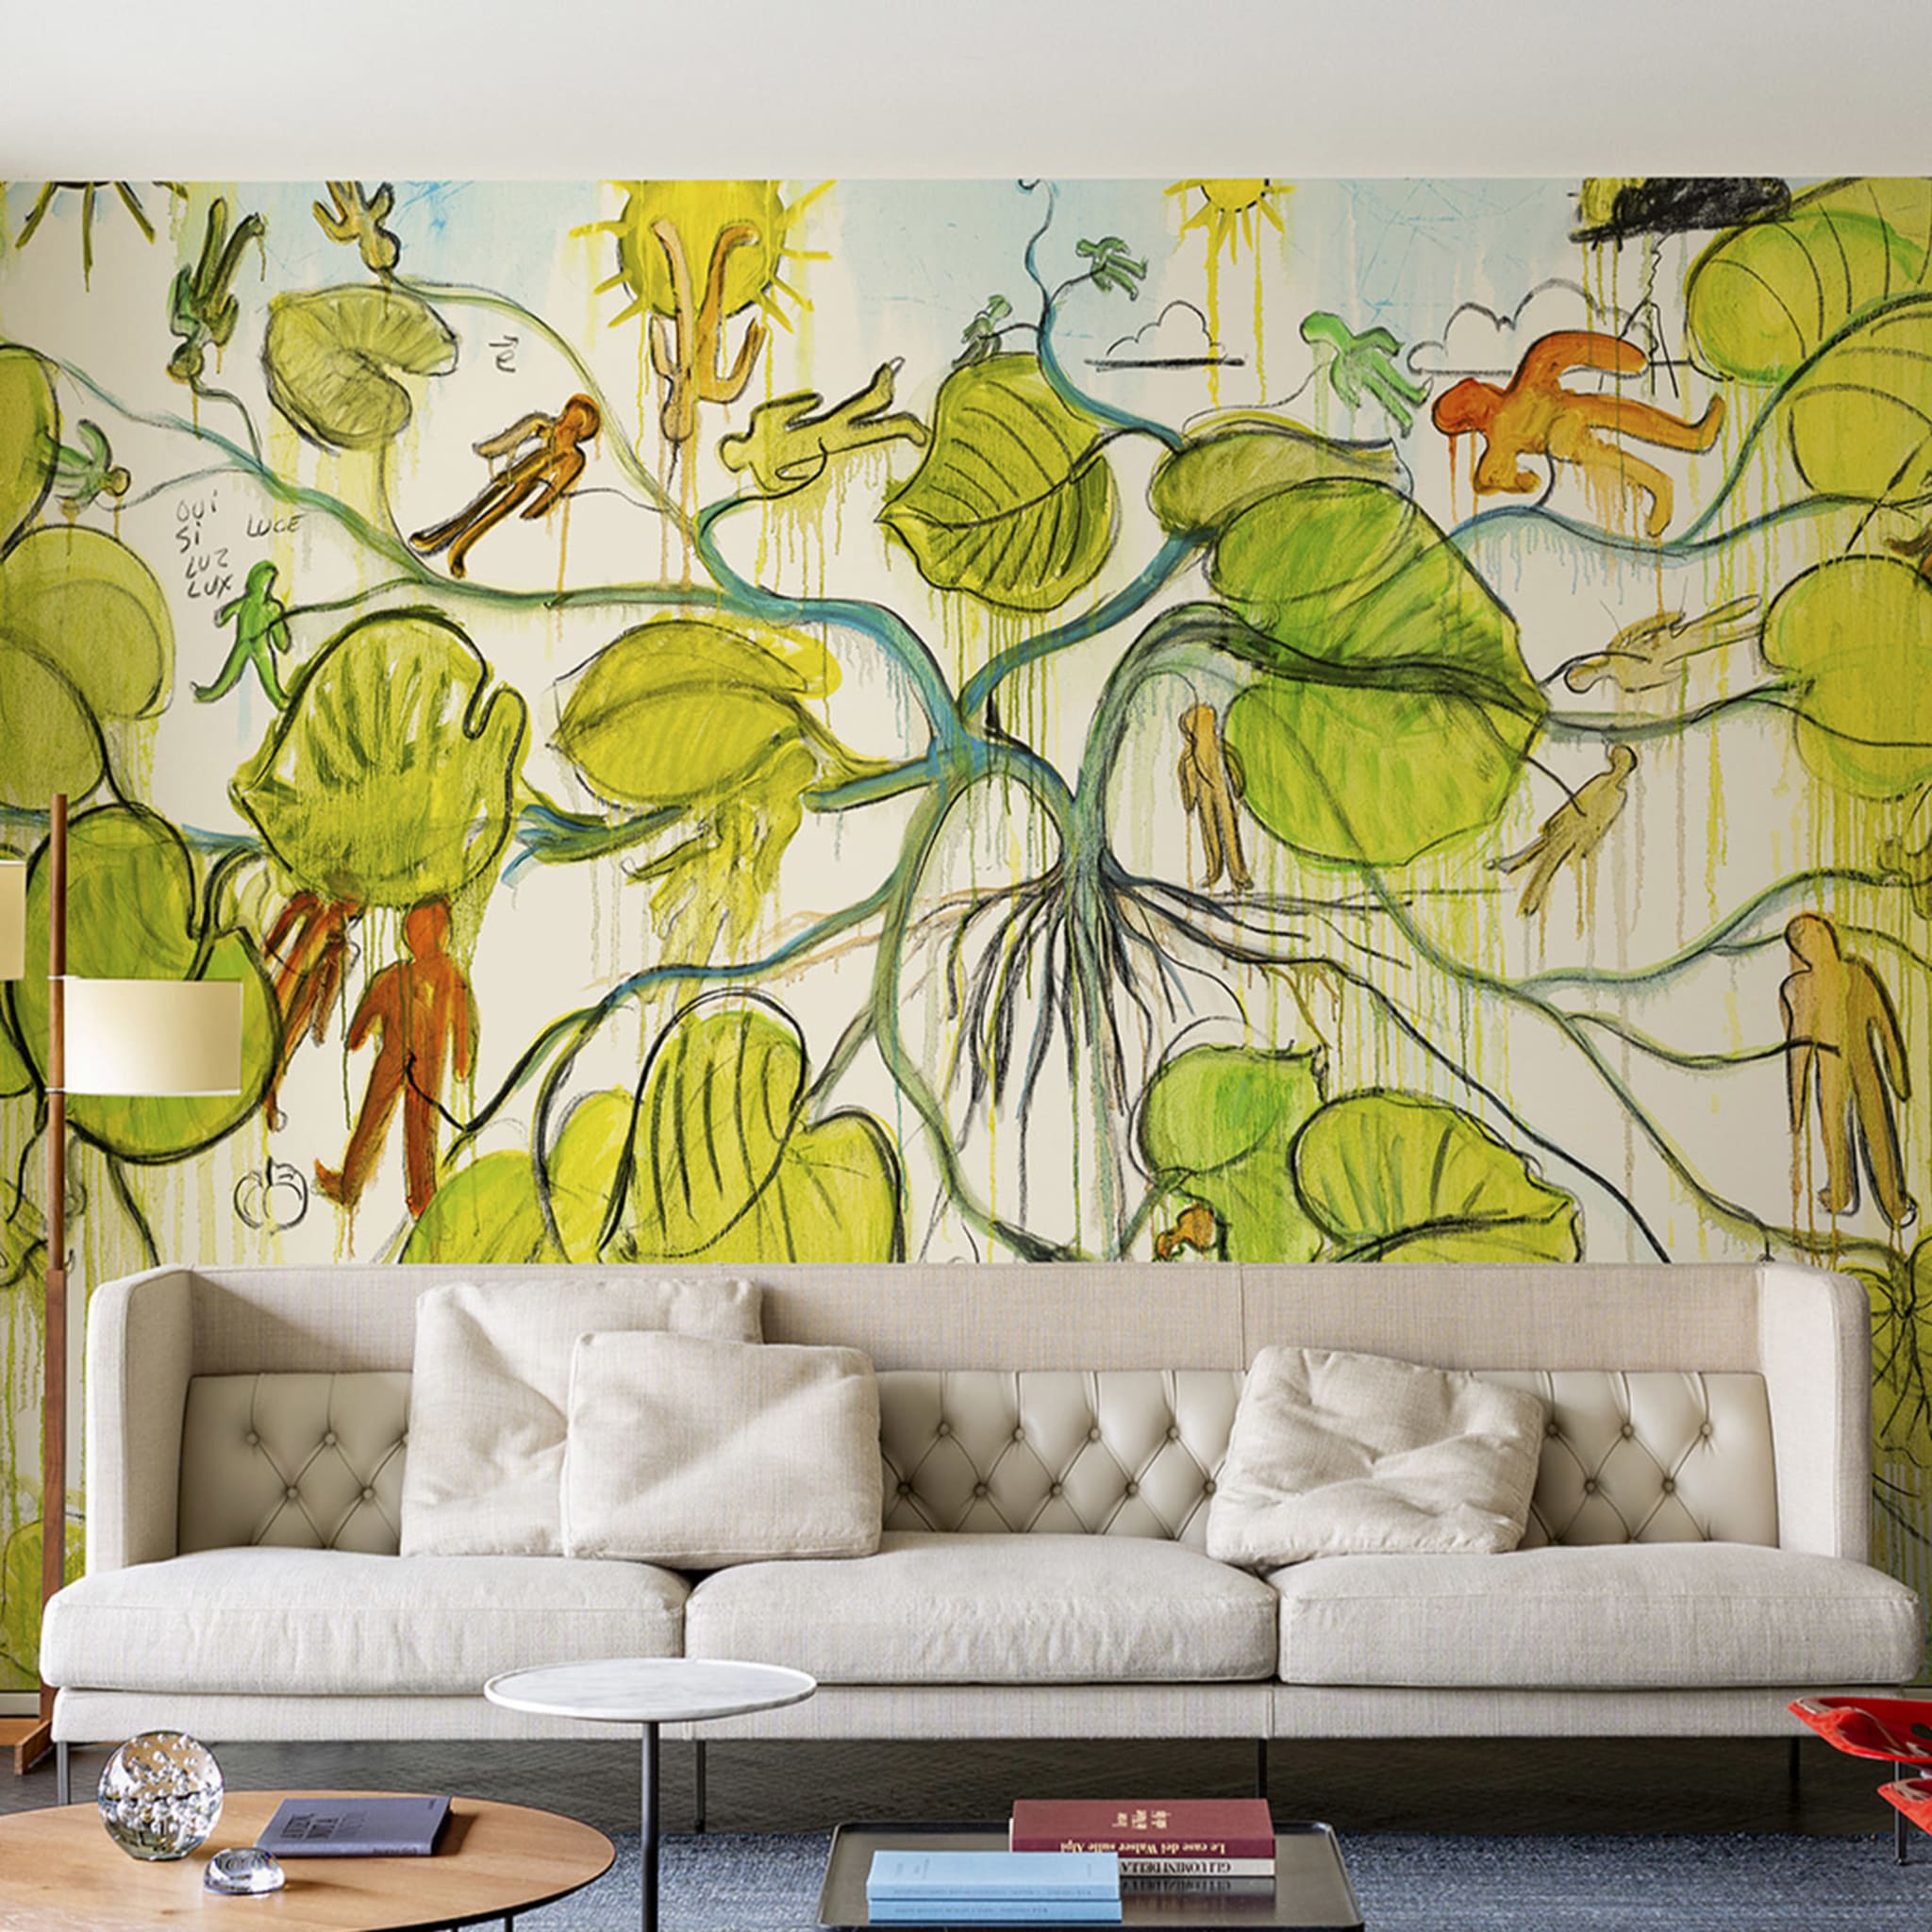 Organic Polychrome Wallpaper by Fabrice Hyber - Alternative view 1